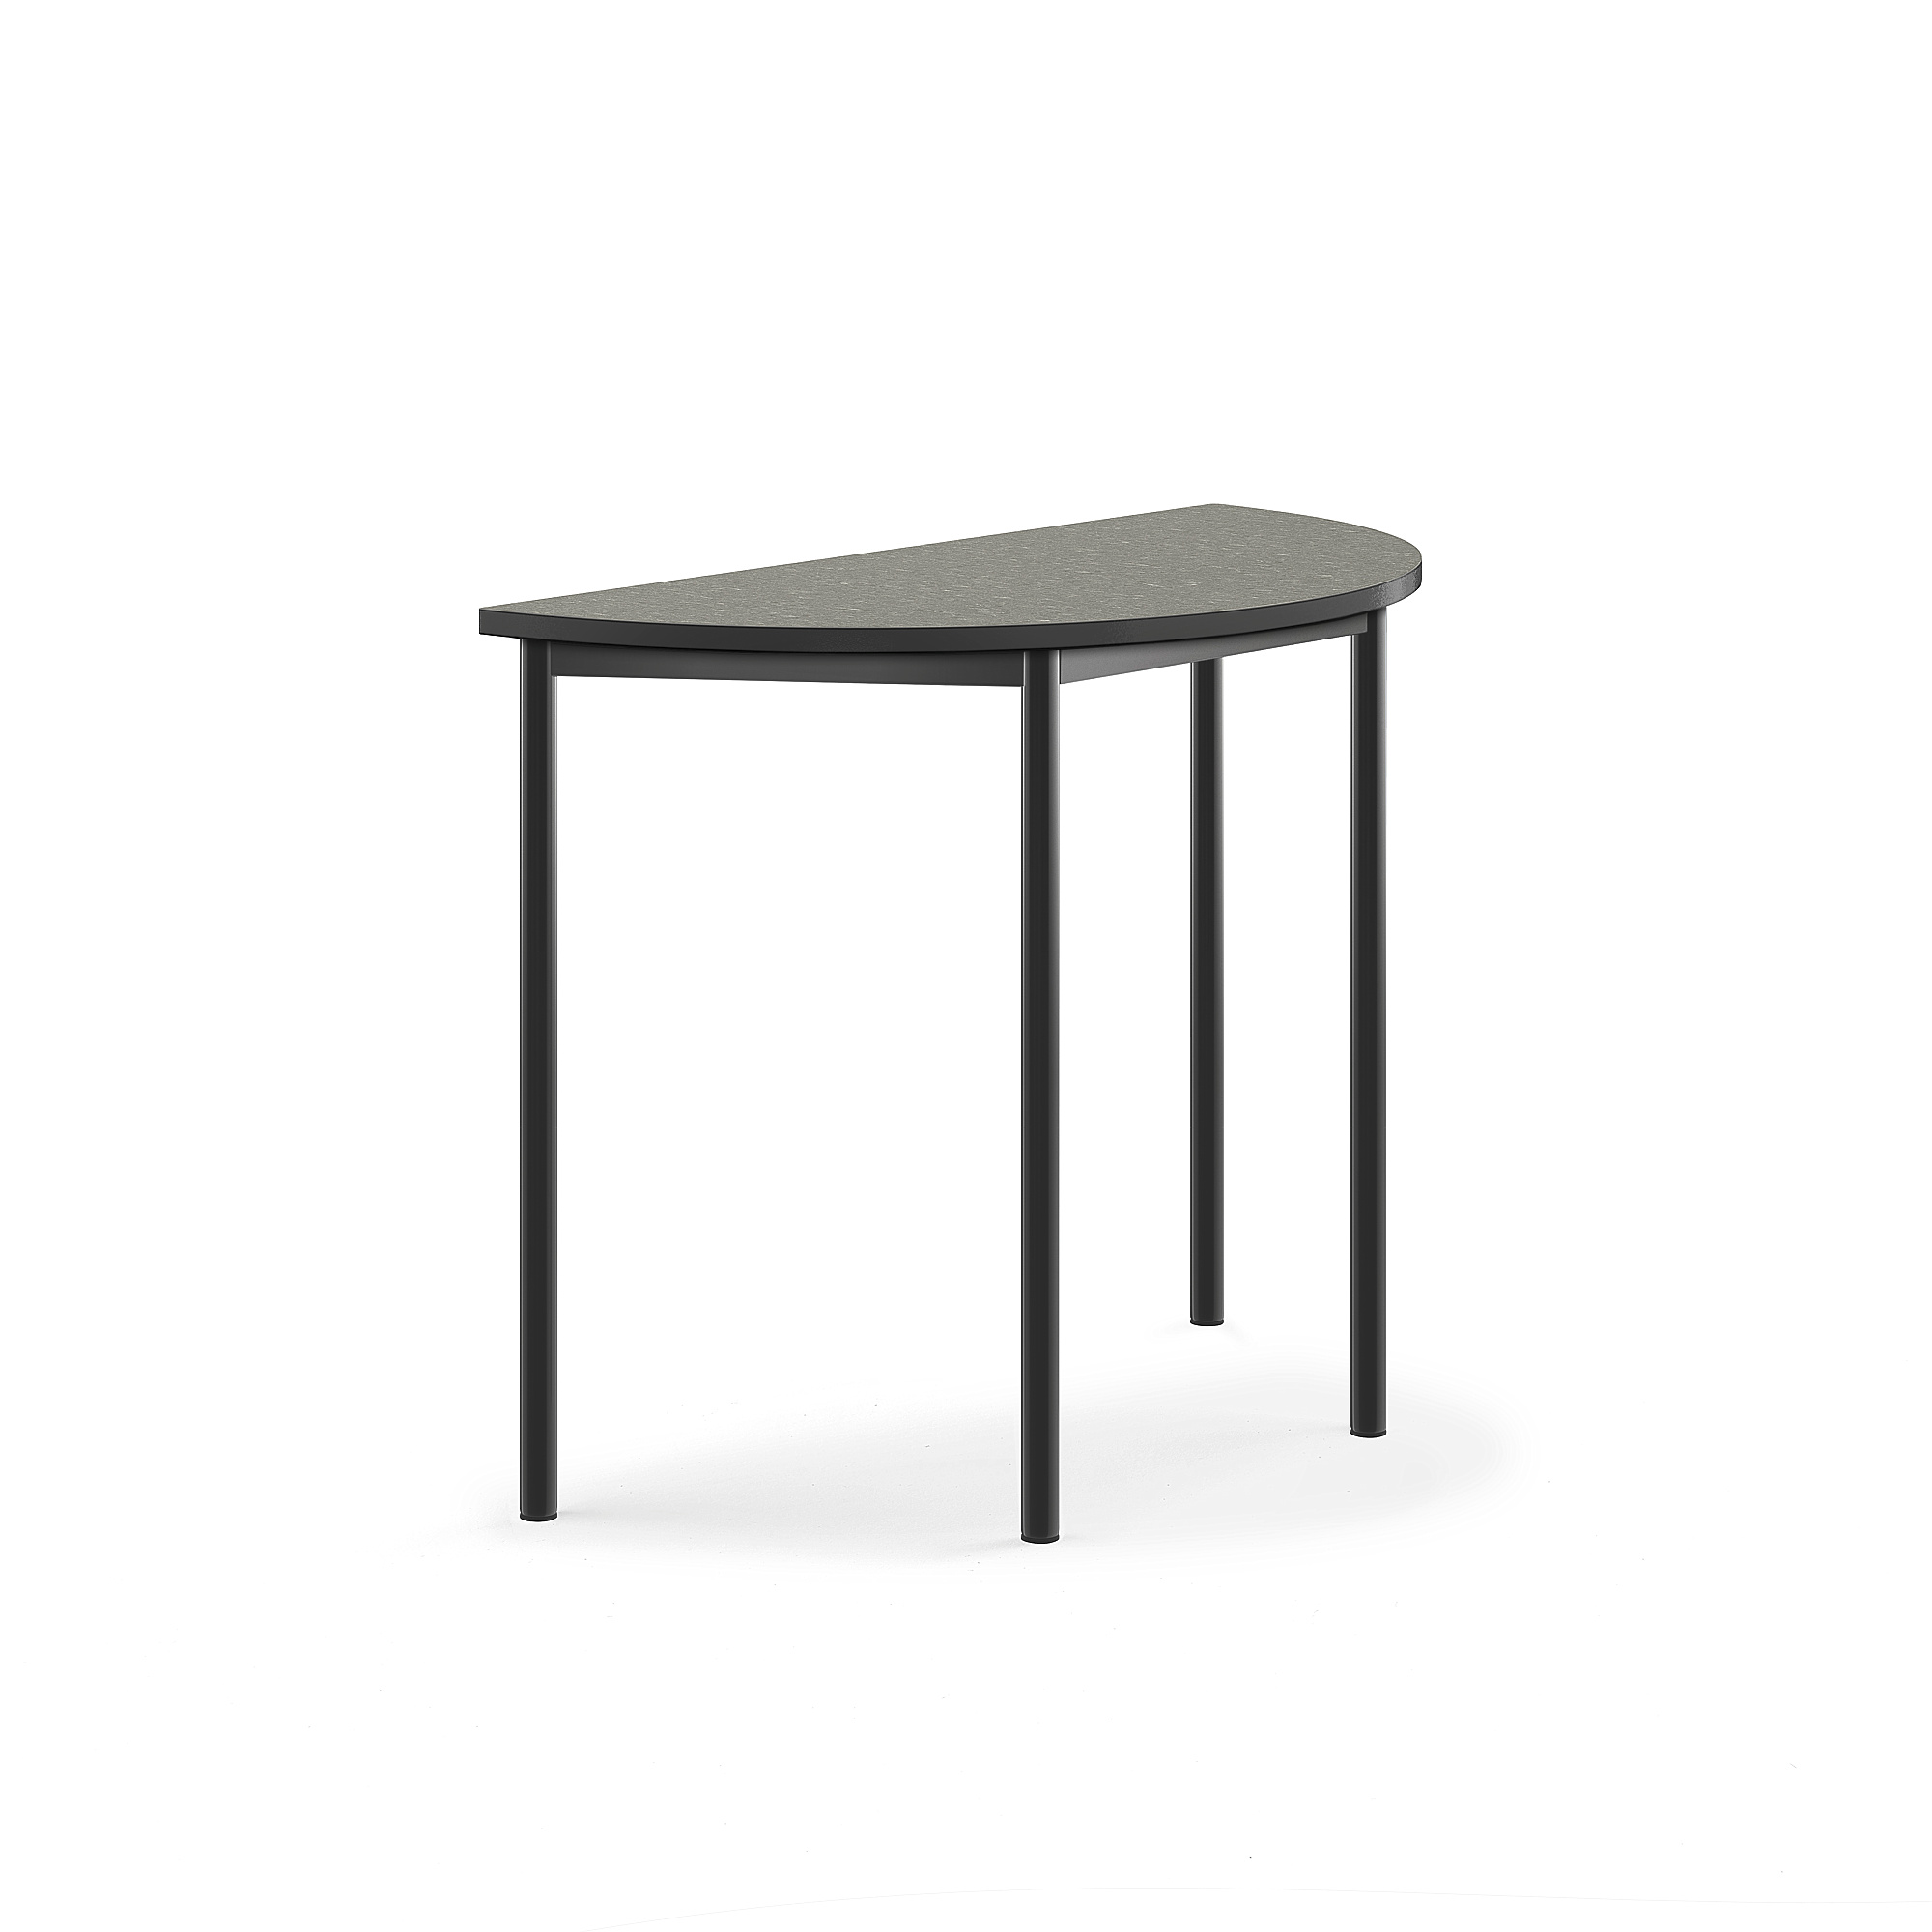 Stůl SONITUS, půlkruh, 1200x600x900 mm, antracitově šedé nohy, deska s linoleem, tmavě šedá